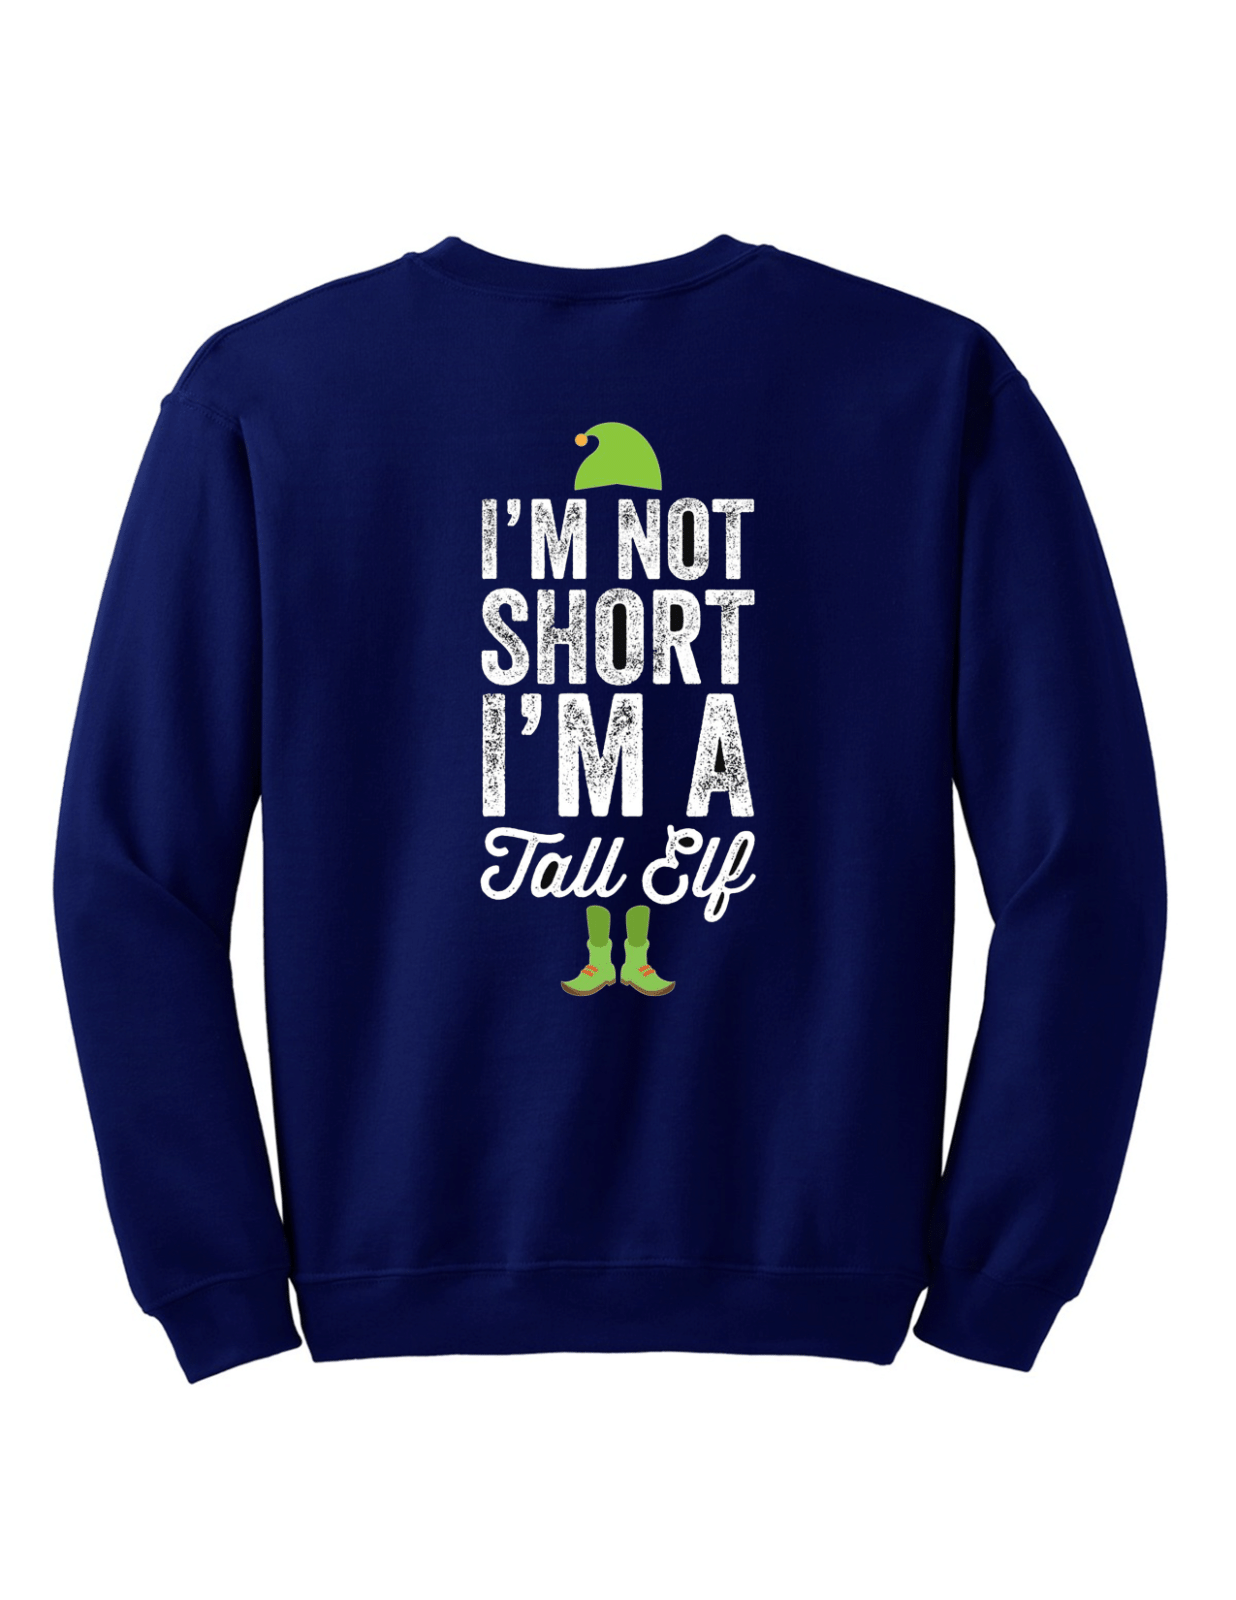 I am not short i'm tall ELF Christmas Sweatshirt - Funny Elf Jumper Style: Sweatshirt, Color: Blue